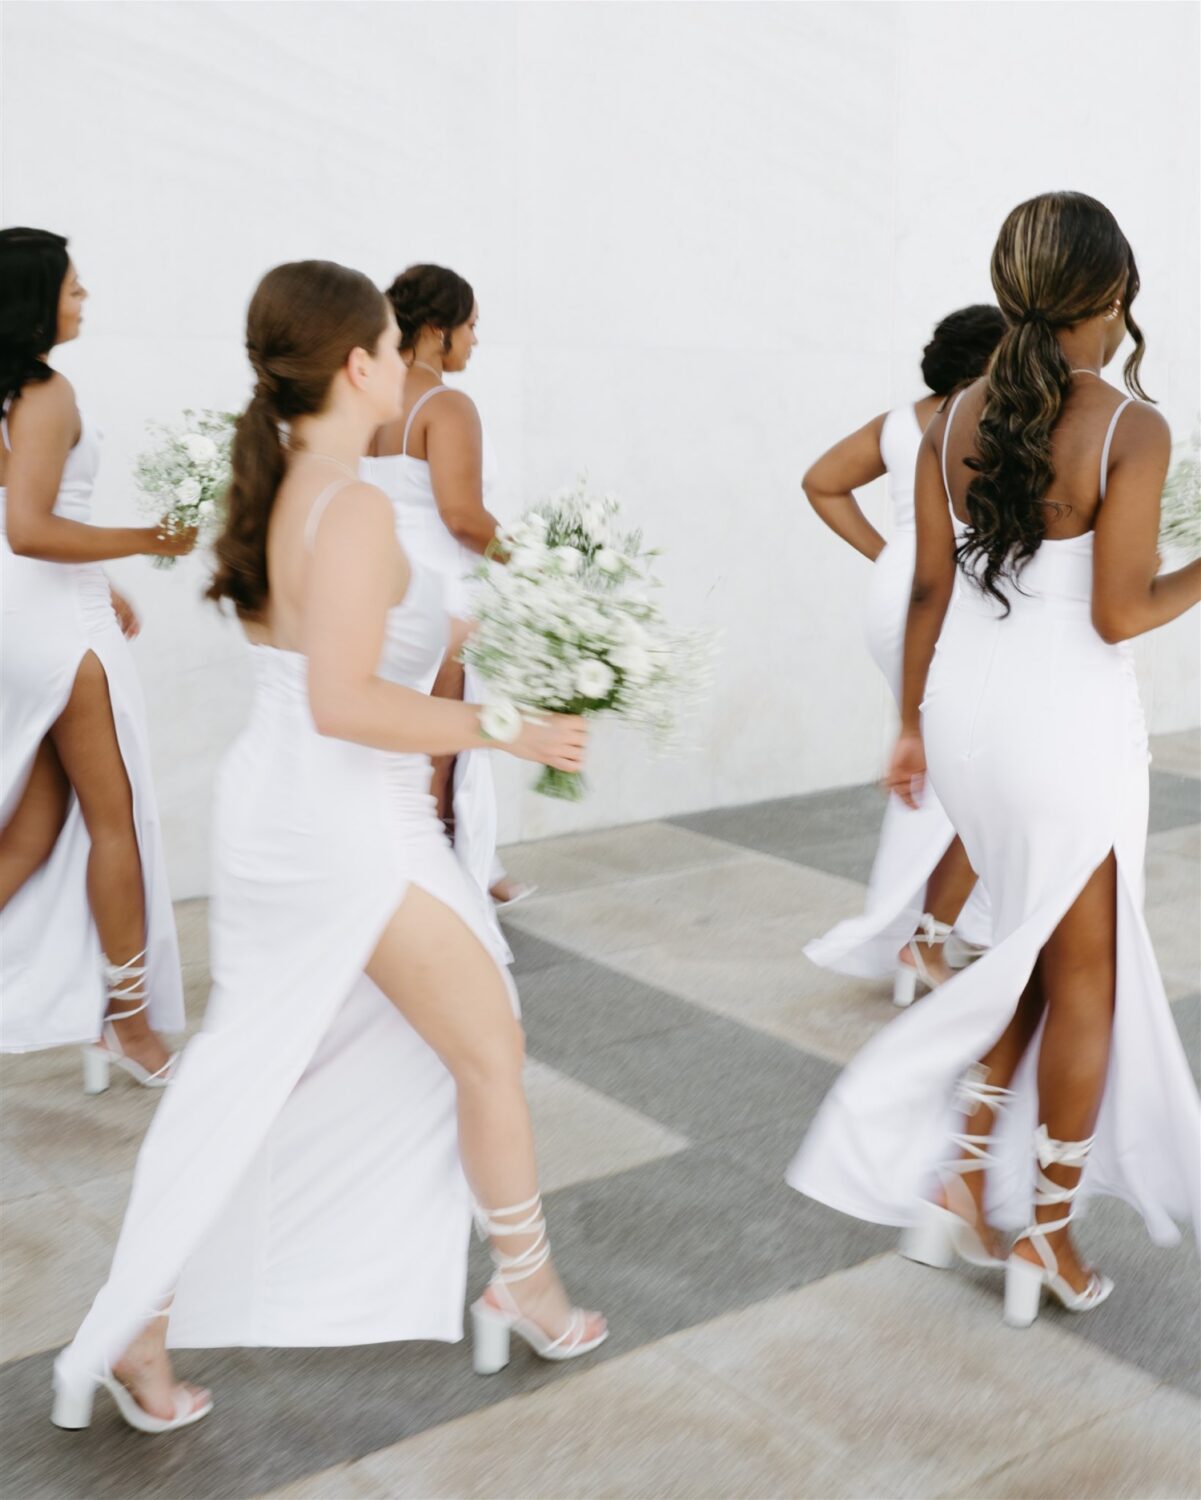 bridesmaids walking motion portrait white bridesmaid gowns white lace up shoes